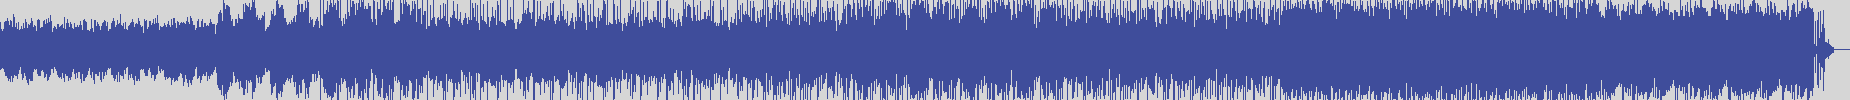 noclouds_chillout [NOC136] The Satin Groove - Gava [Original Mix] audio wave form